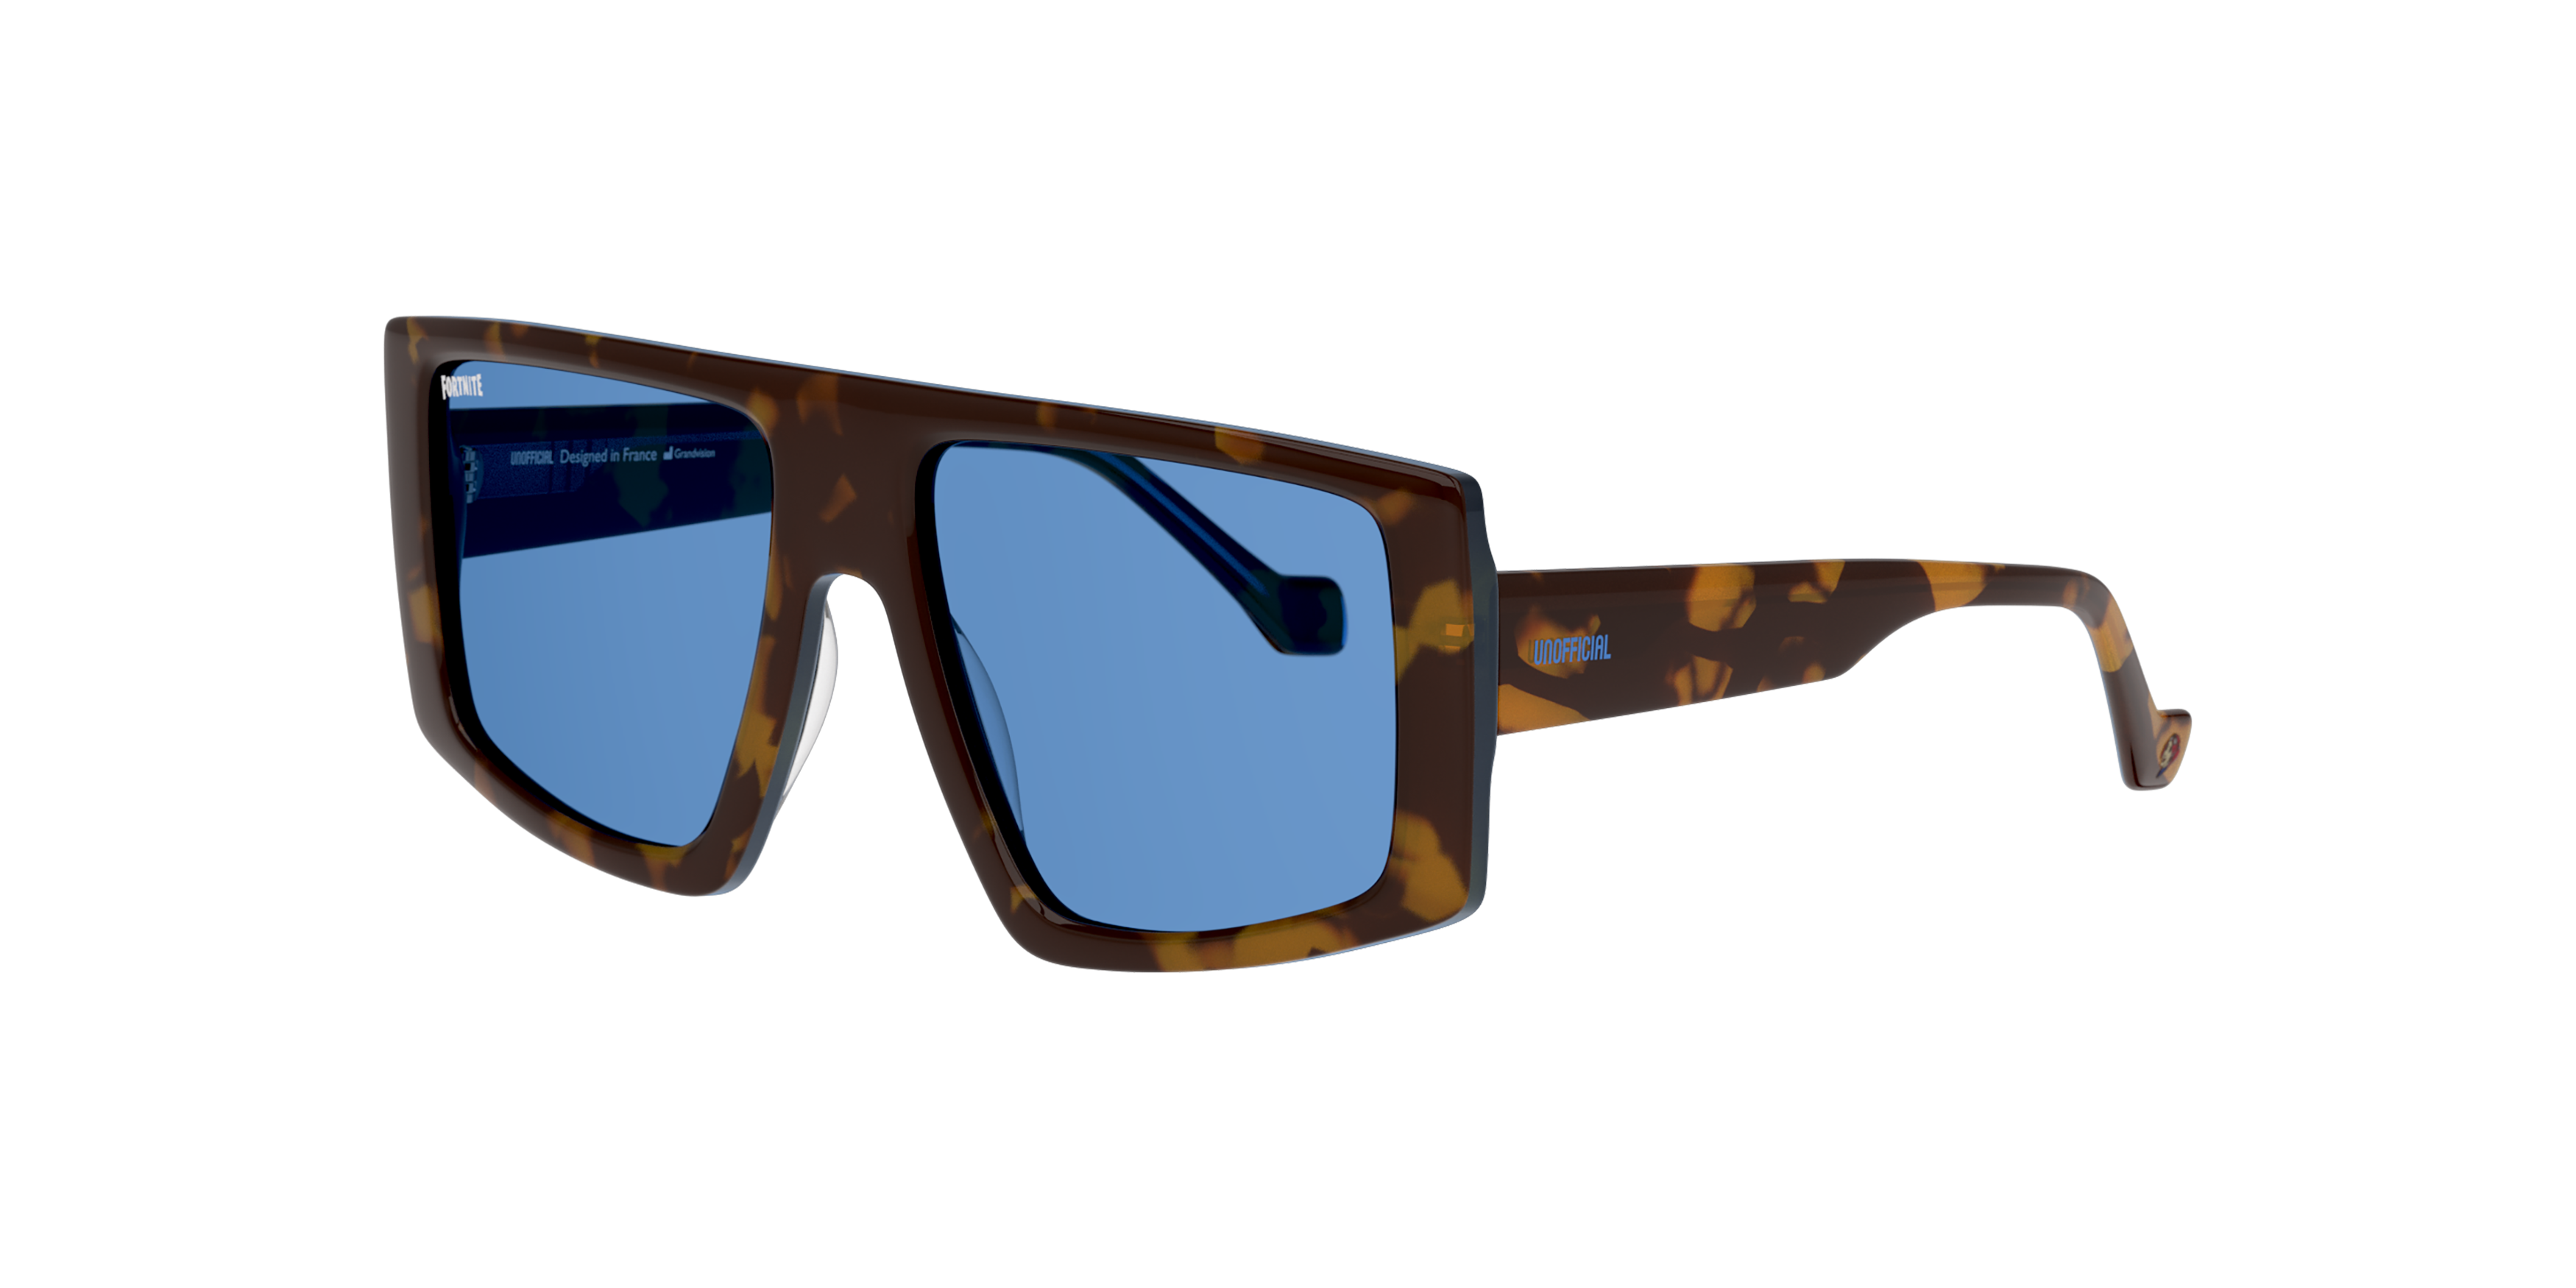 Angle_Left01 Fortnite with Unofficial UNSU0146 Sunglasses Blue / Havana